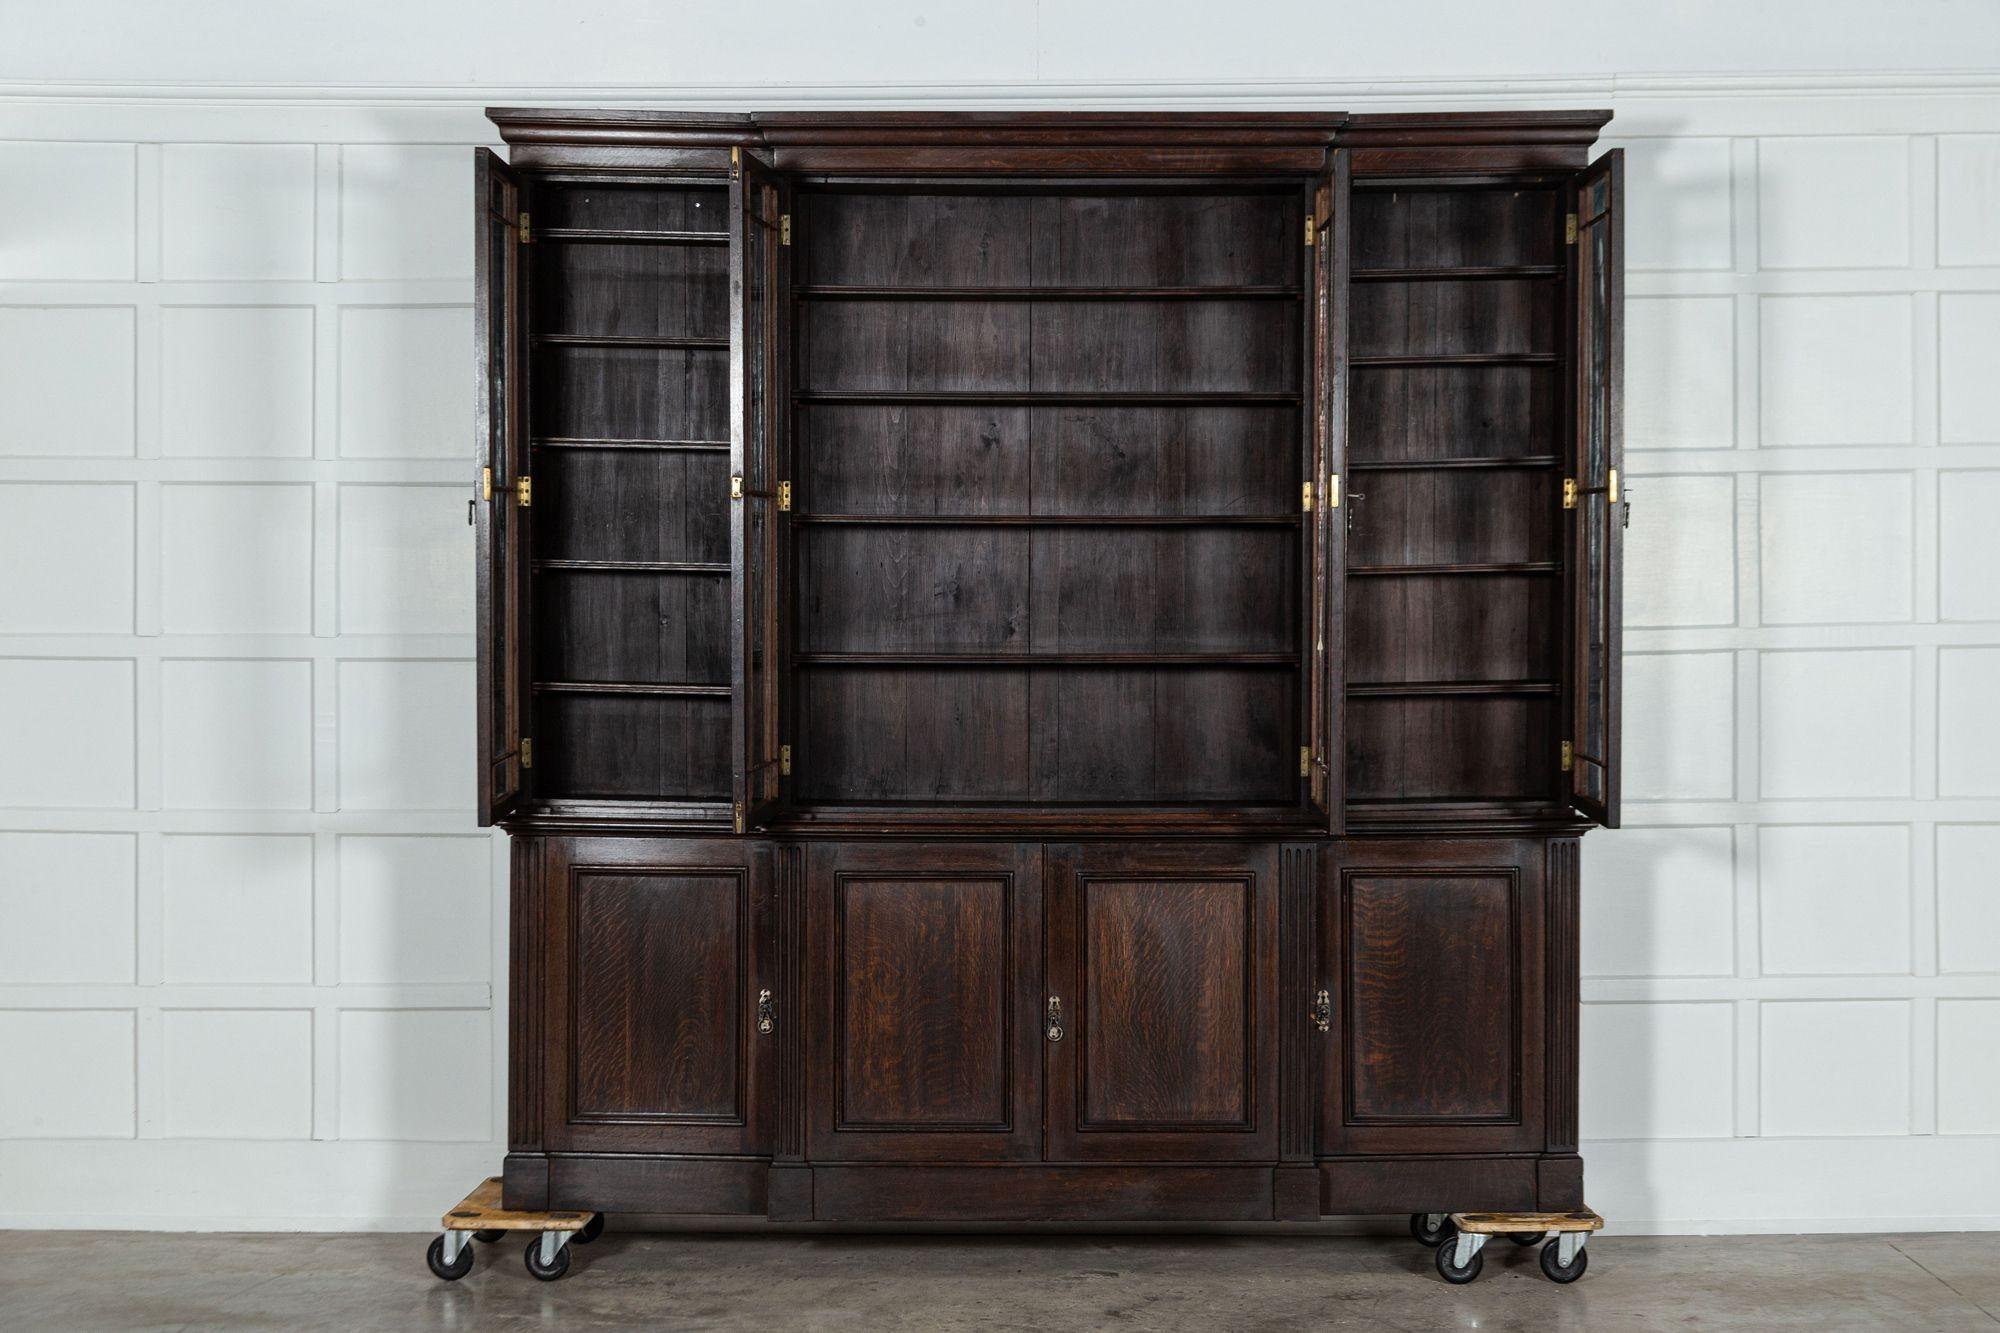 circa 1870
Large 19thC English Oak Glazed Breakfront Bookcase
sku 1596
Base W236 x D38 x H85 cm
Top W240 x D33 x H150 cm
Together W240 x D38 x H235 cm